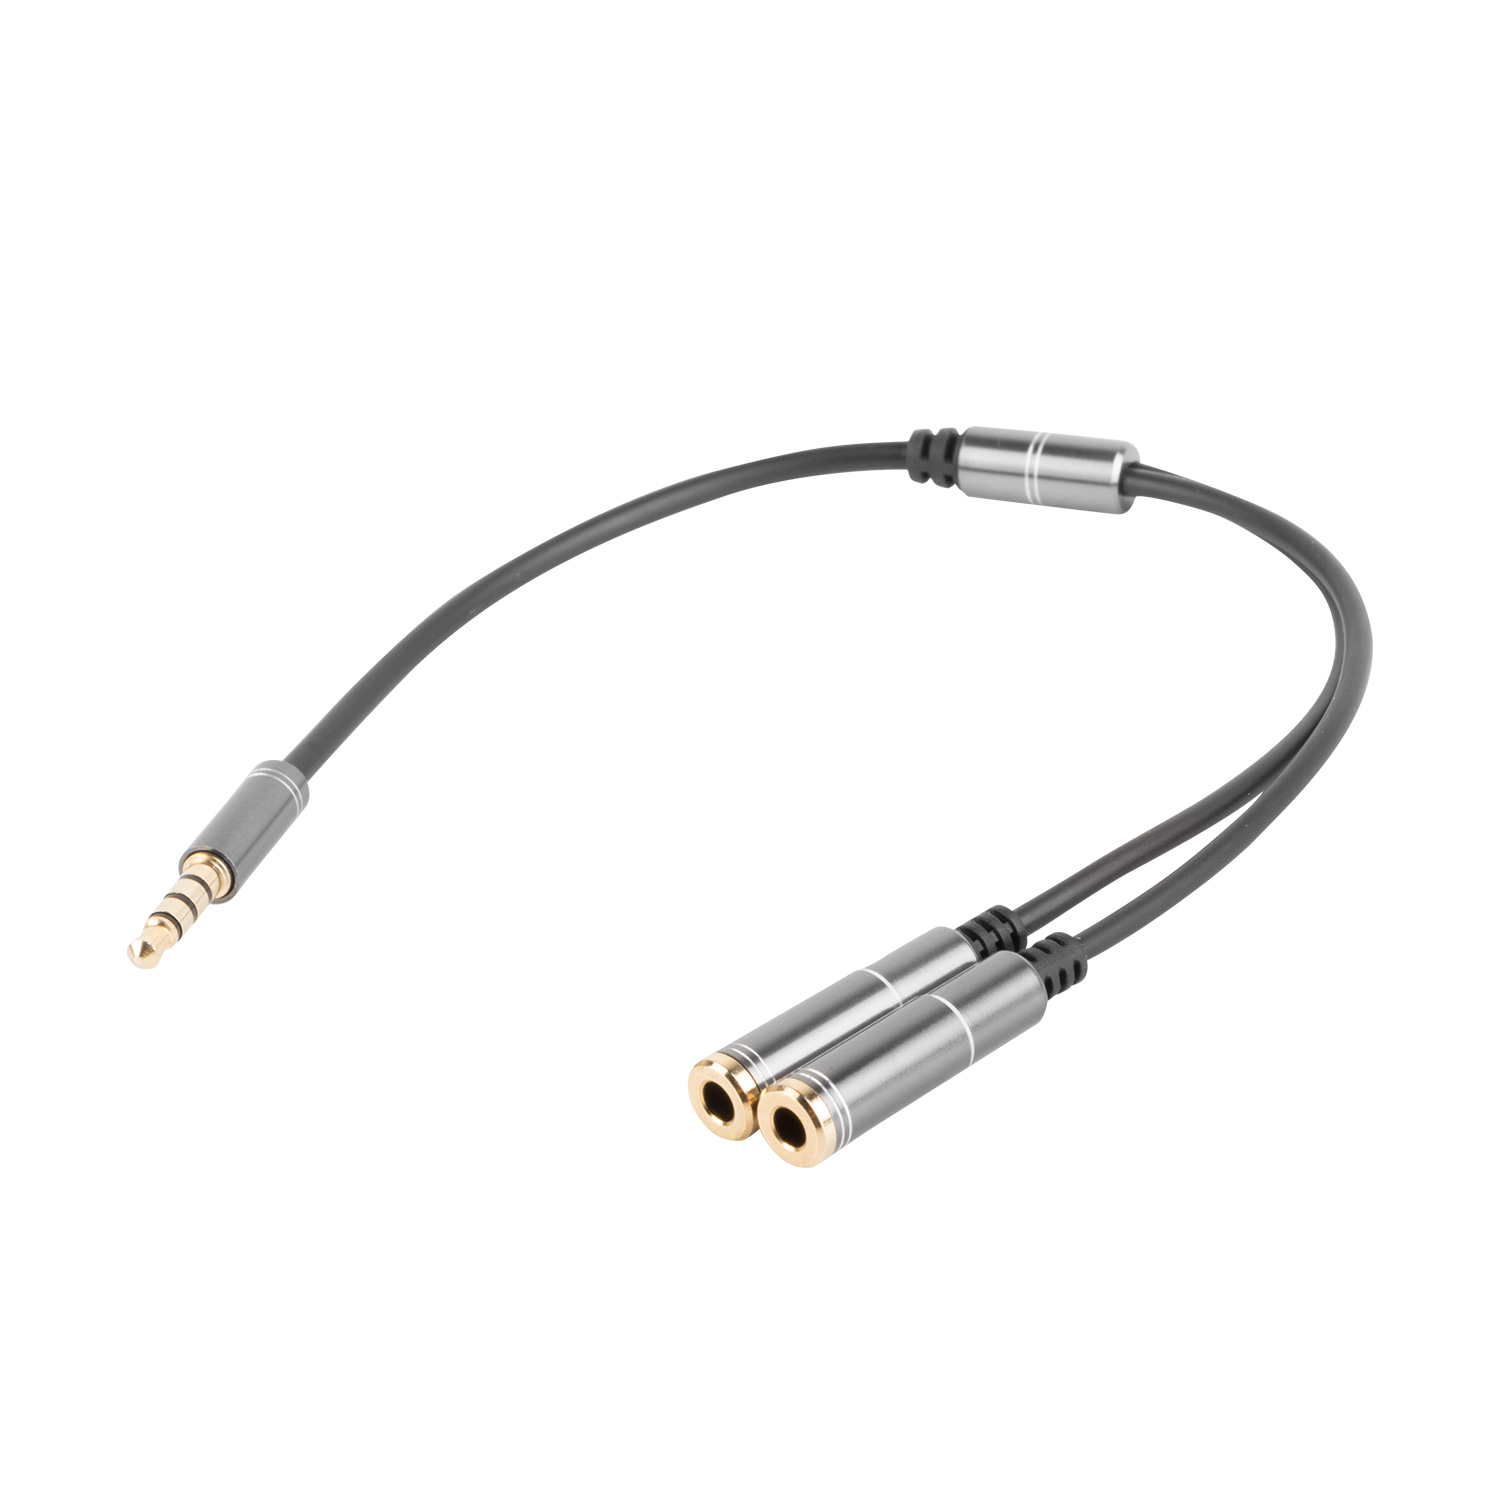 Natec premium 4-PIN headset adapter for PS4, PC, smartphones NKA-0729